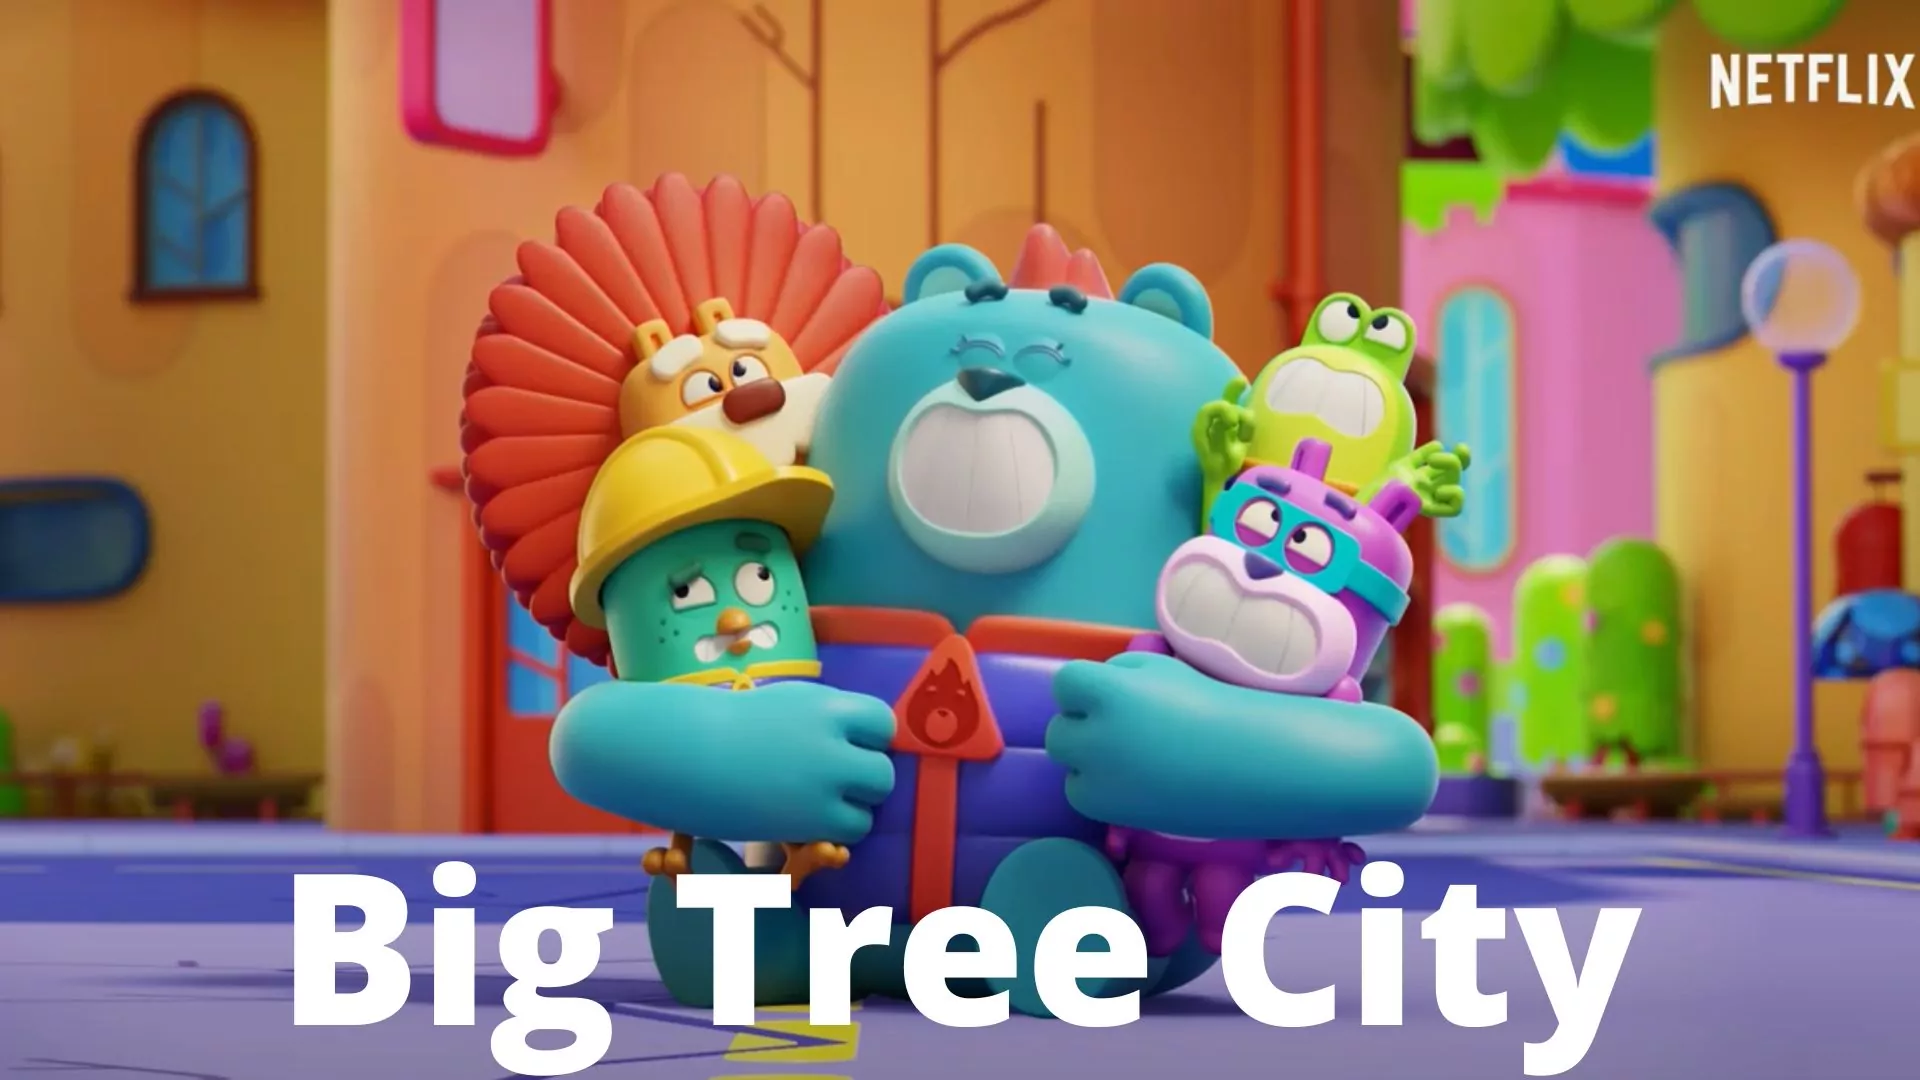 Big Tree City Parents Guide. Big Tree City Age Rating. 2022 Netflix animated series